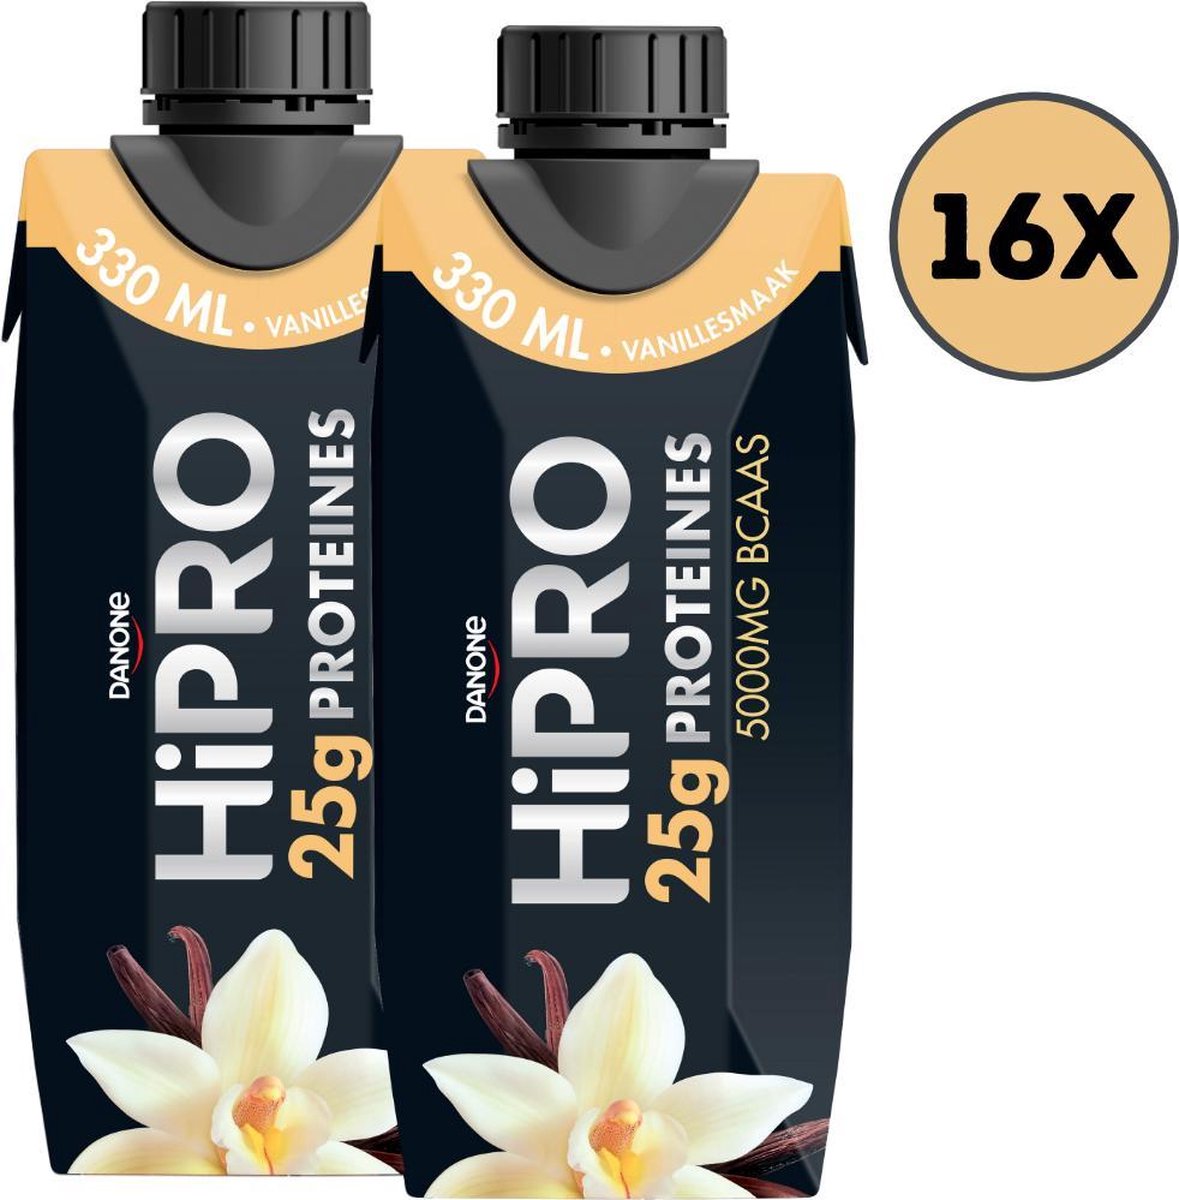 Danone HiPRO - Proteïne Vanille - Eiwitshake / Proteïne shake - 25 gram eiwit per fles – (2x8 stuks) 16 stuks (330 ml)